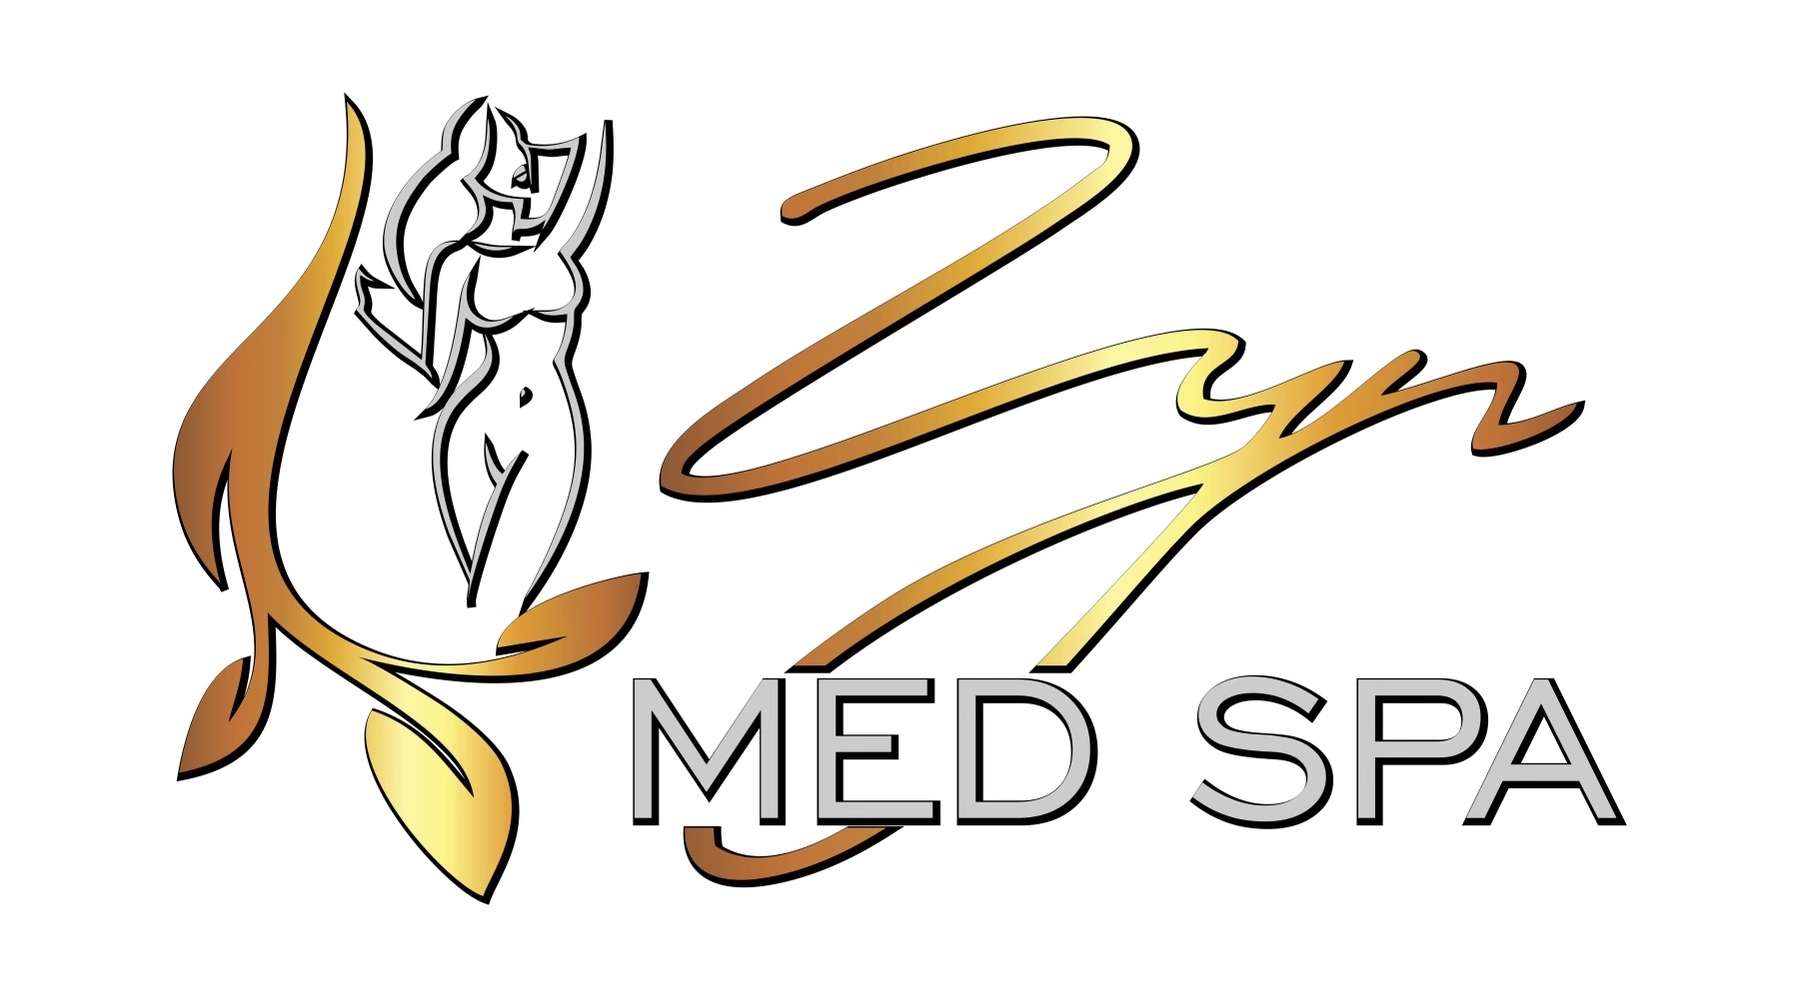 Zyn Med Spa Services